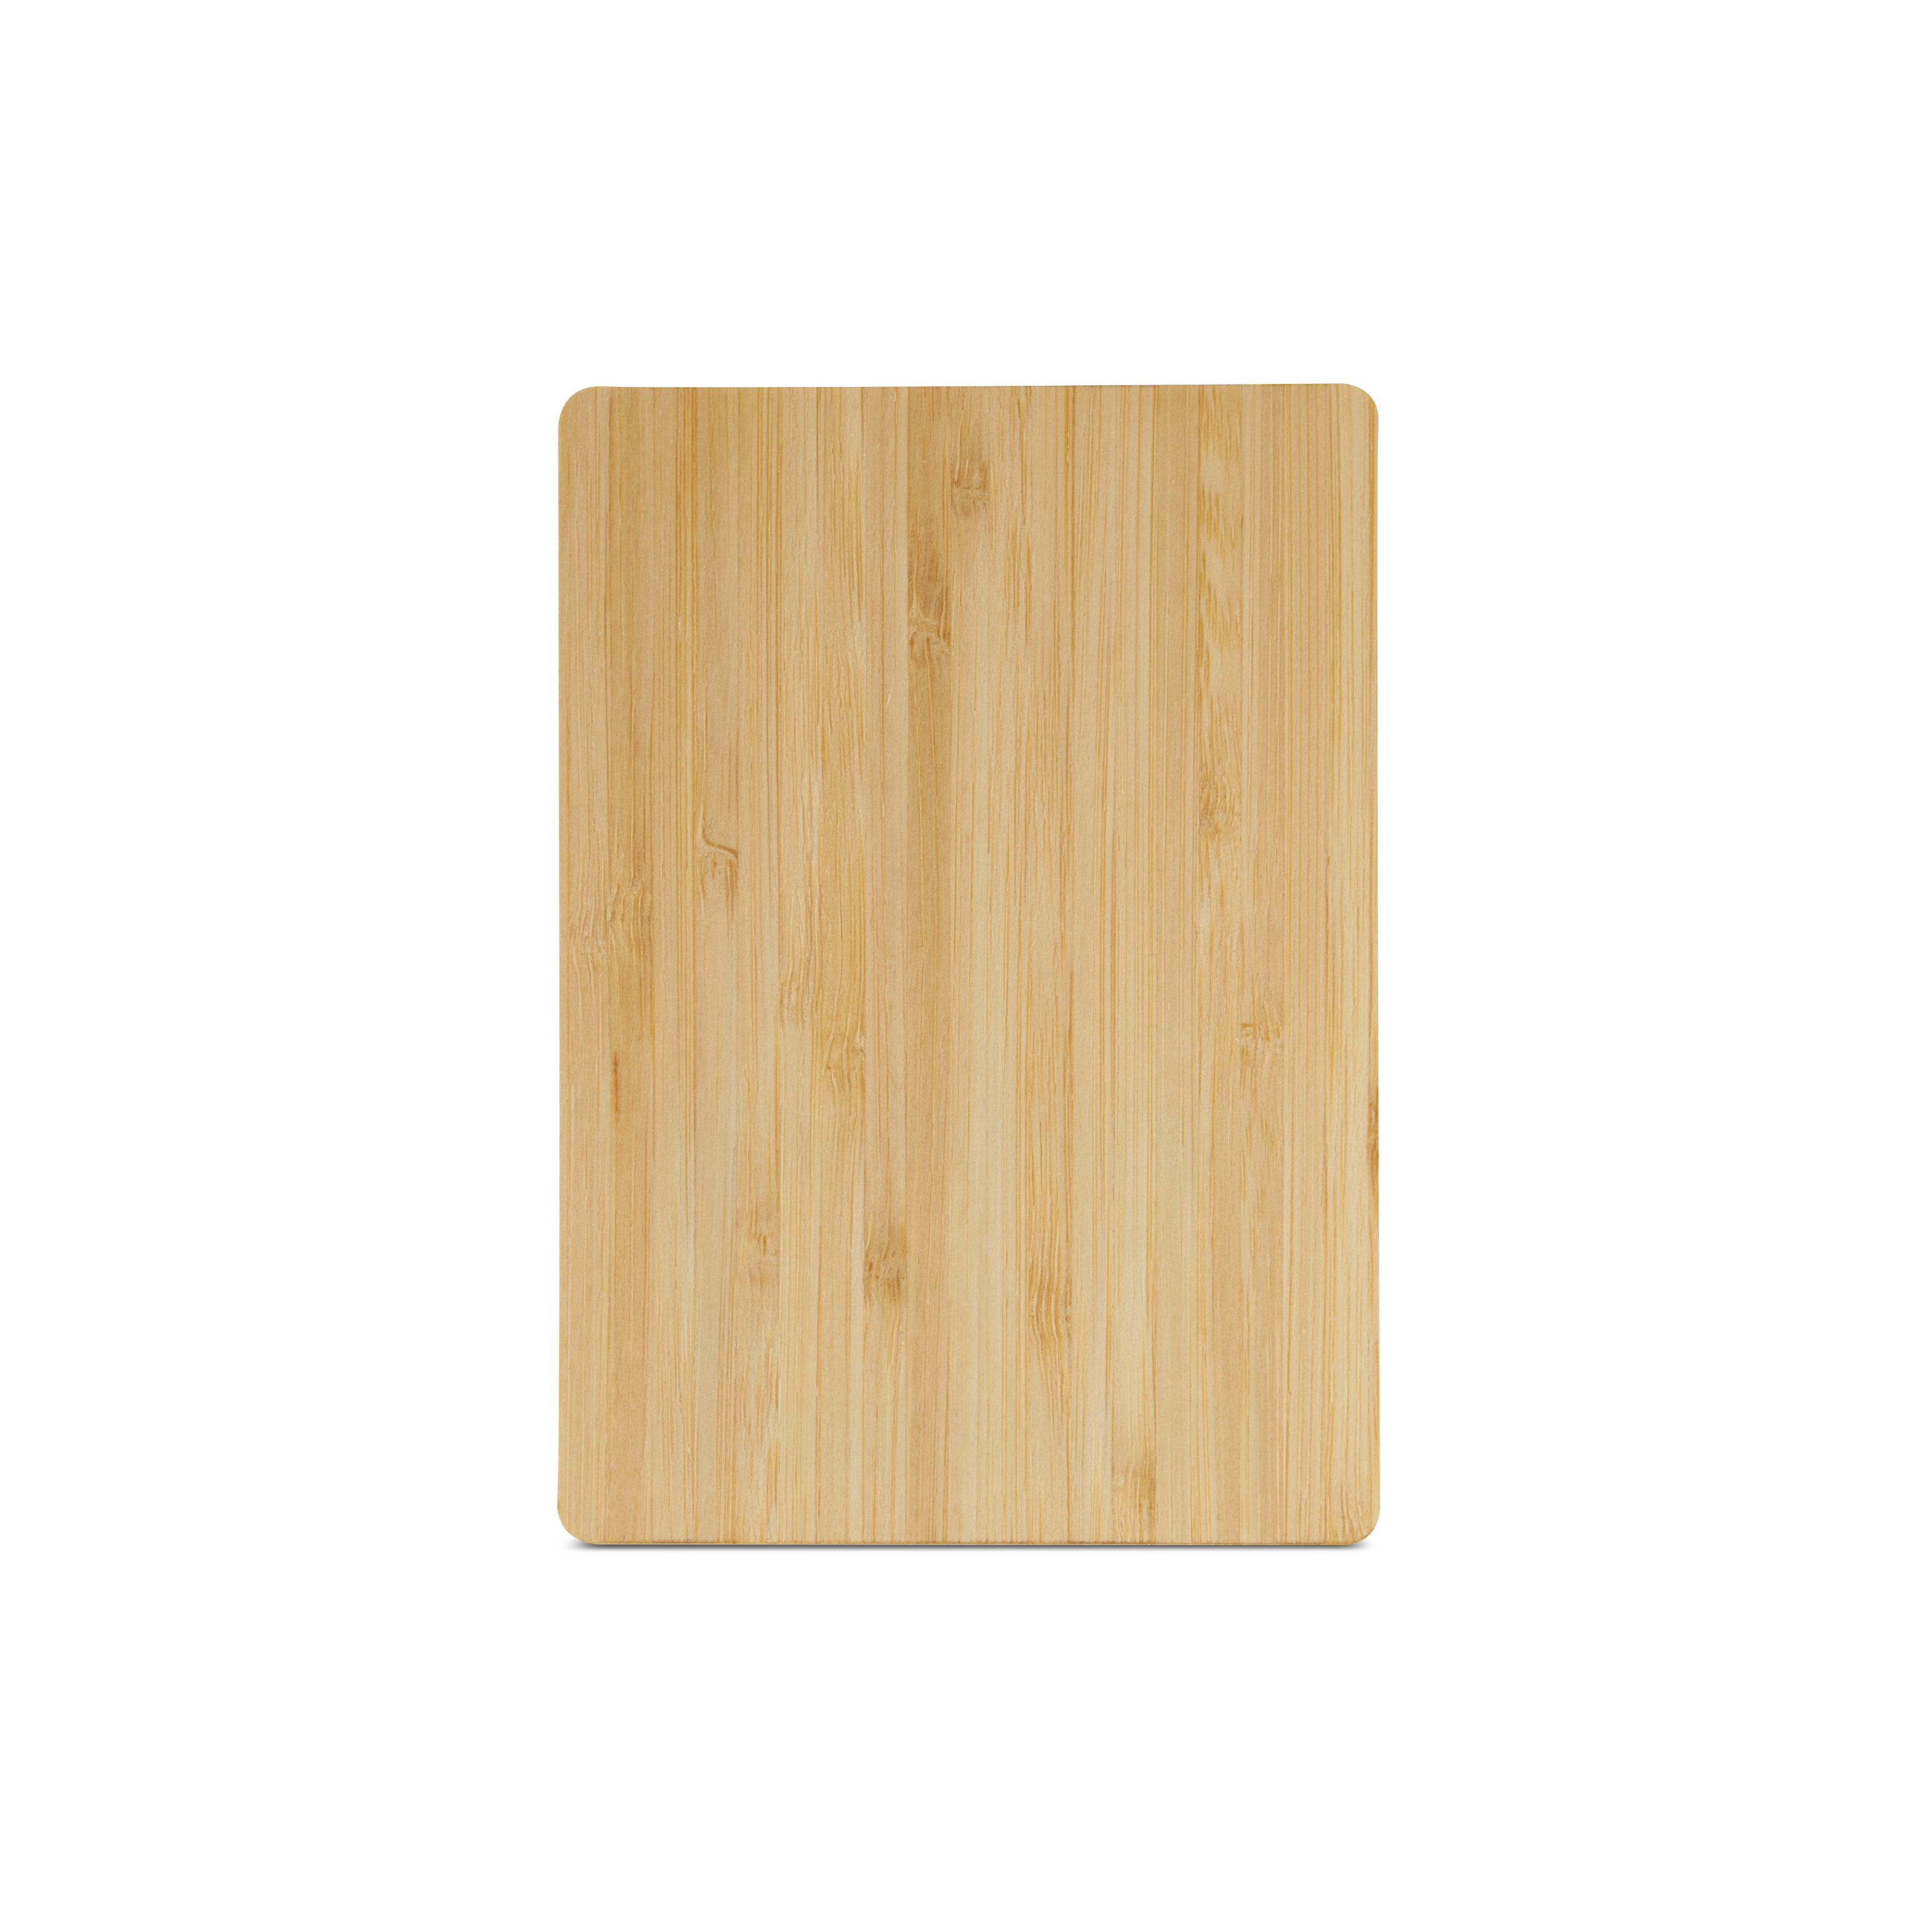 NFC plate bamboo - A6 - NTAG213 - 180 bytes - wood look